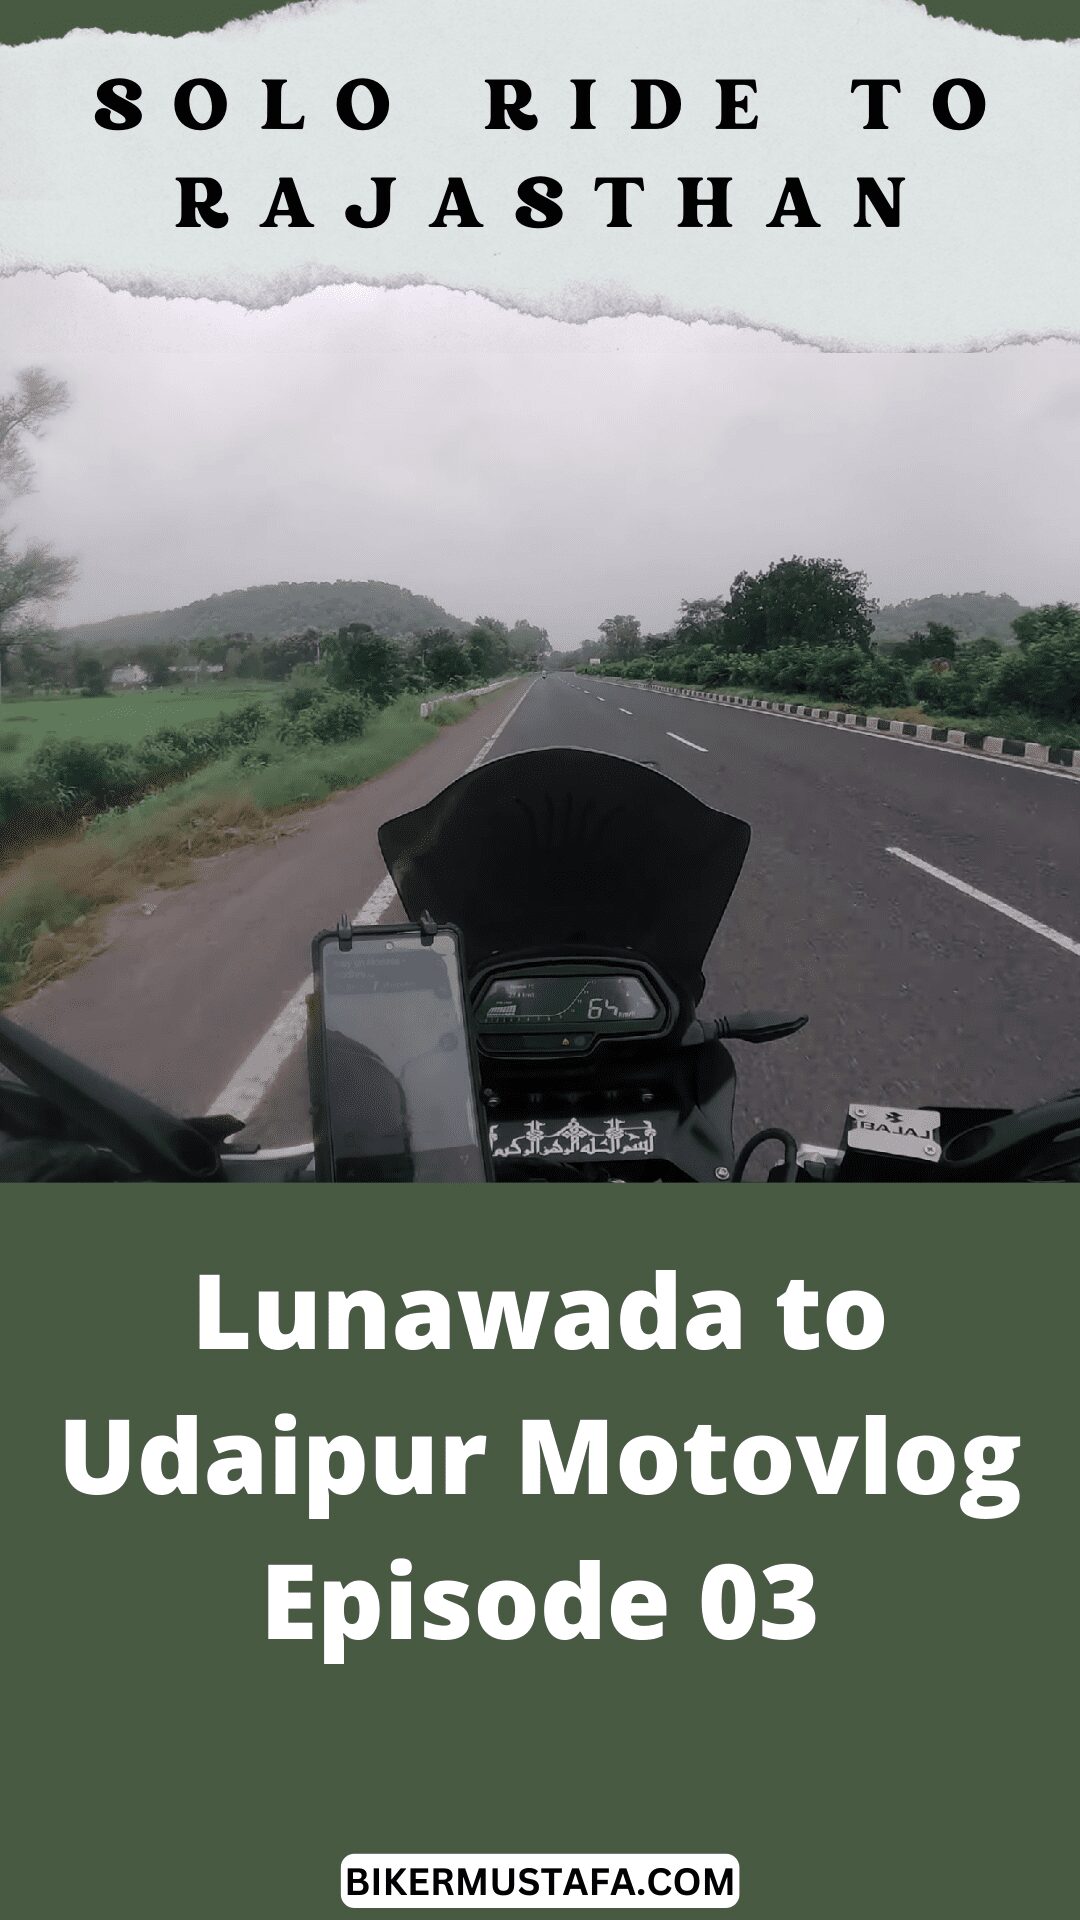 Rajasthan Ride Lunawada to Udaipur Motovlog Episode 03